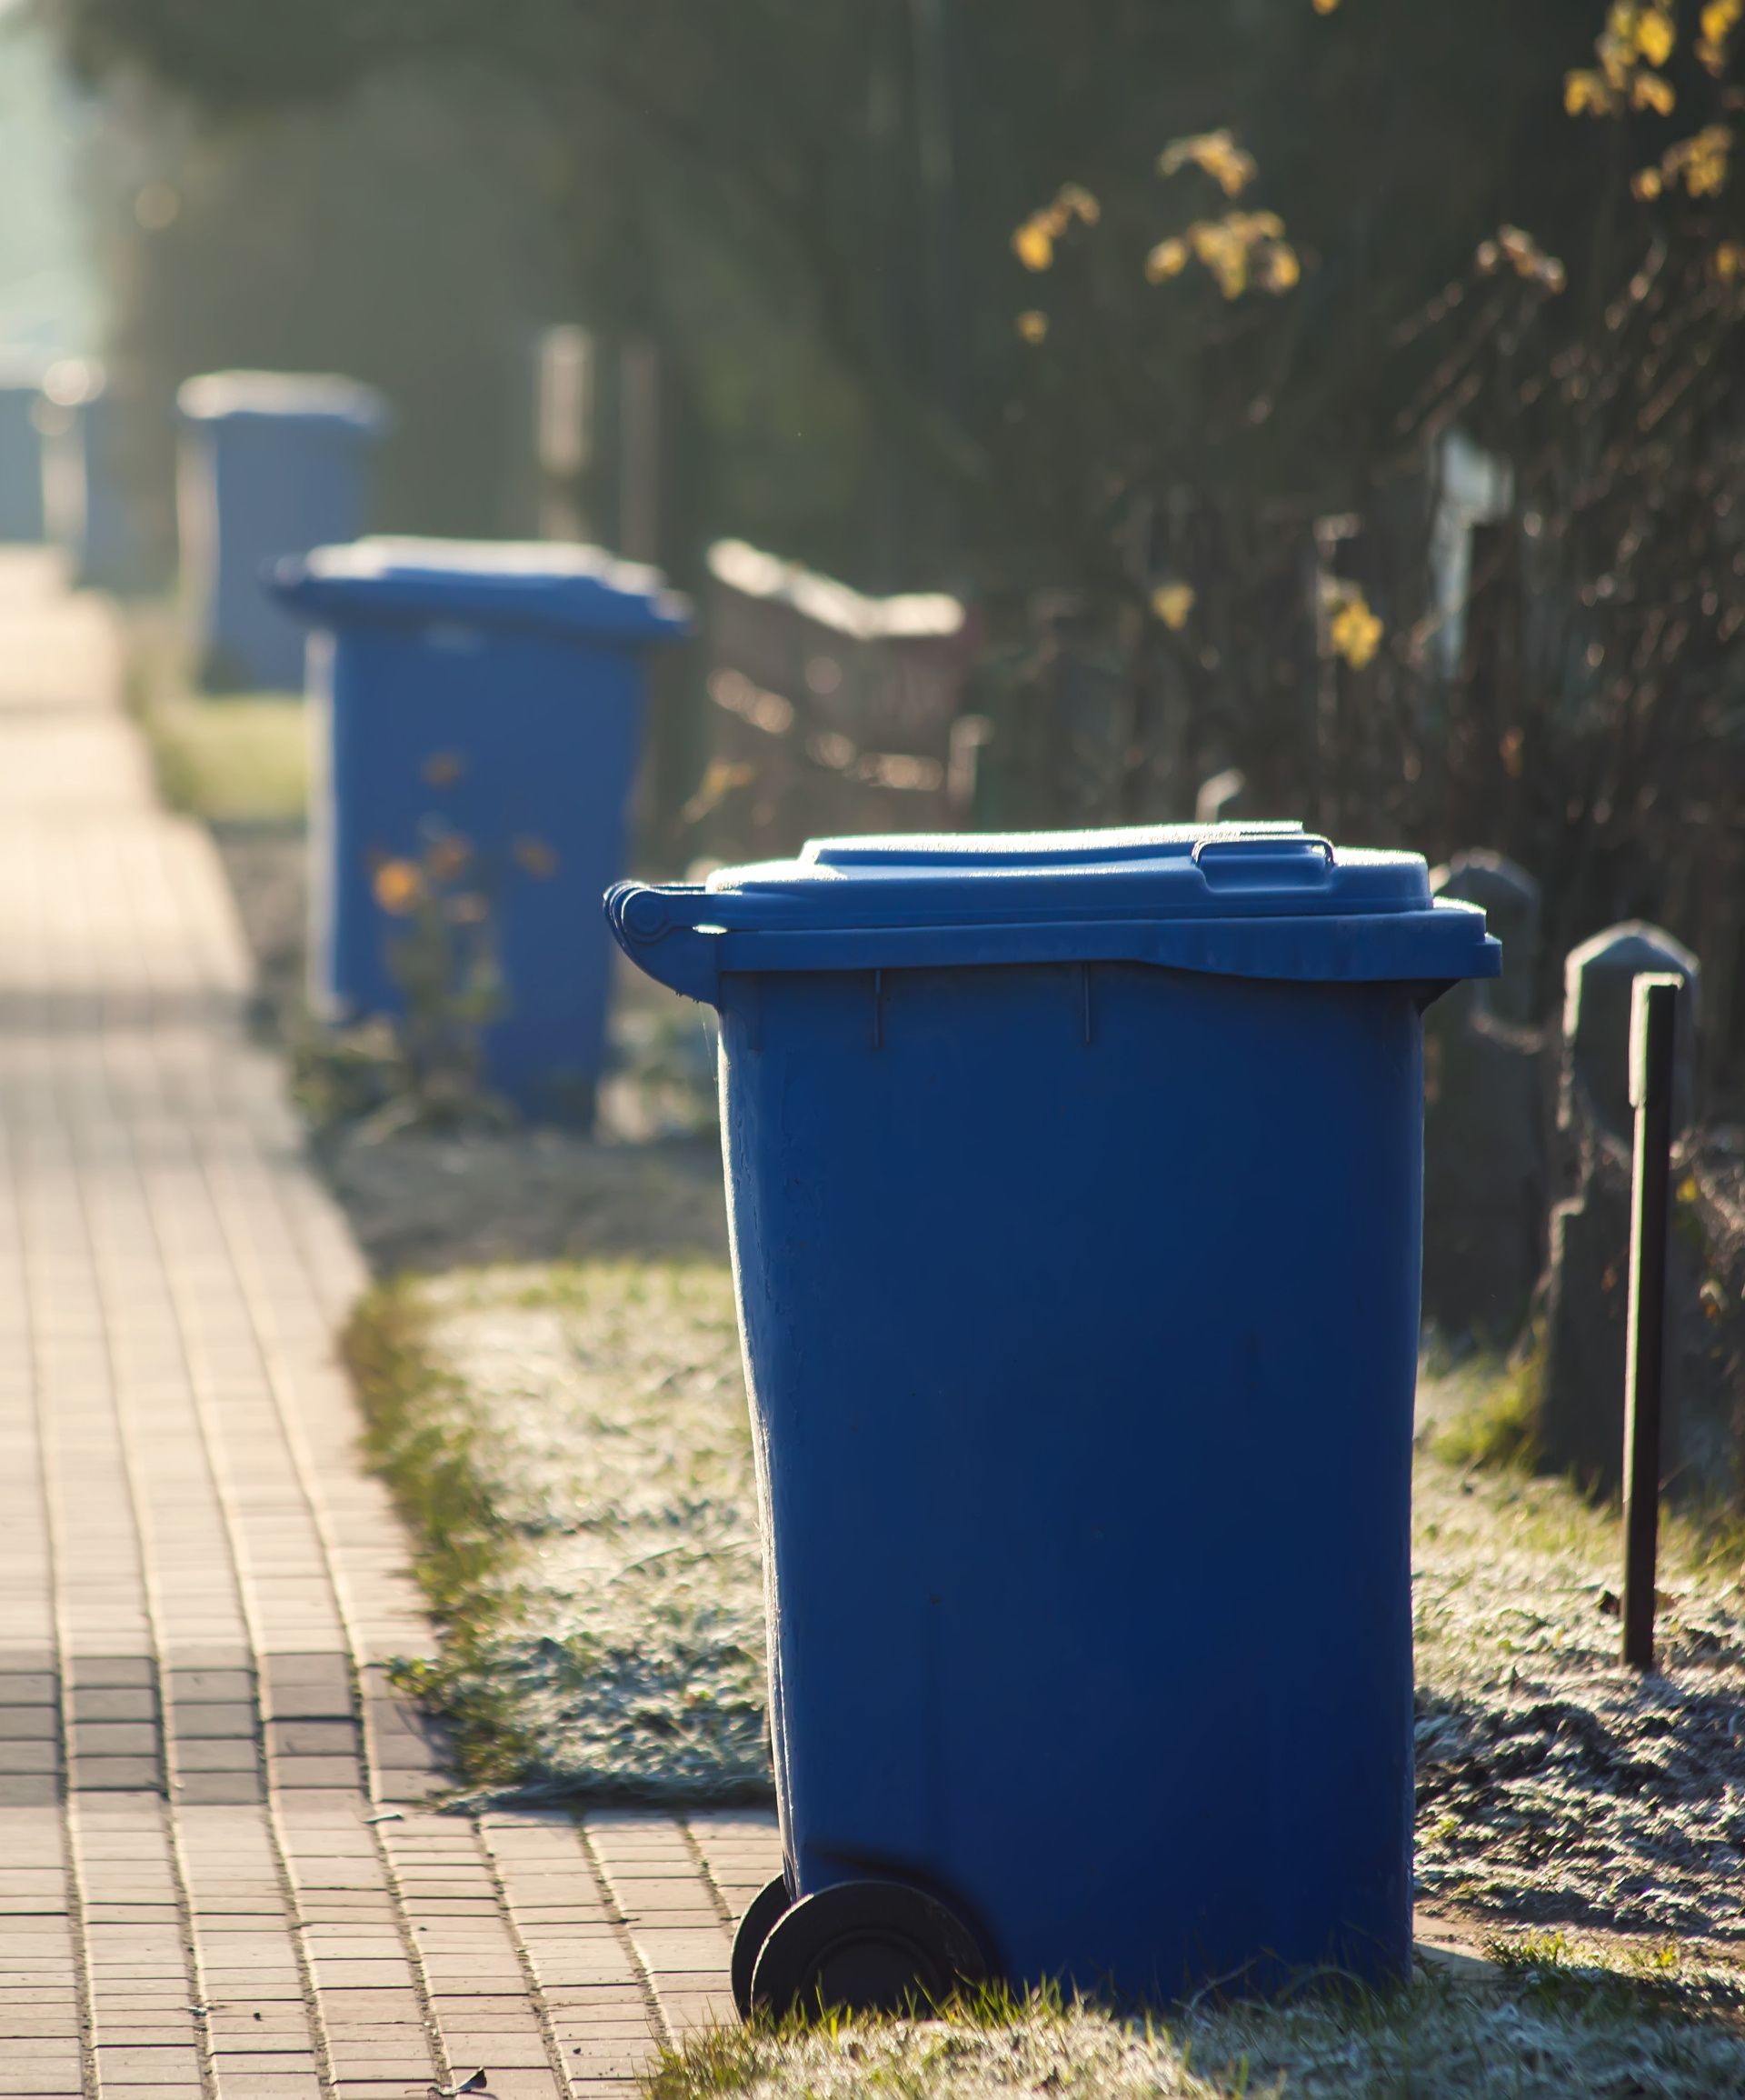 Blue bins sat on the residential street